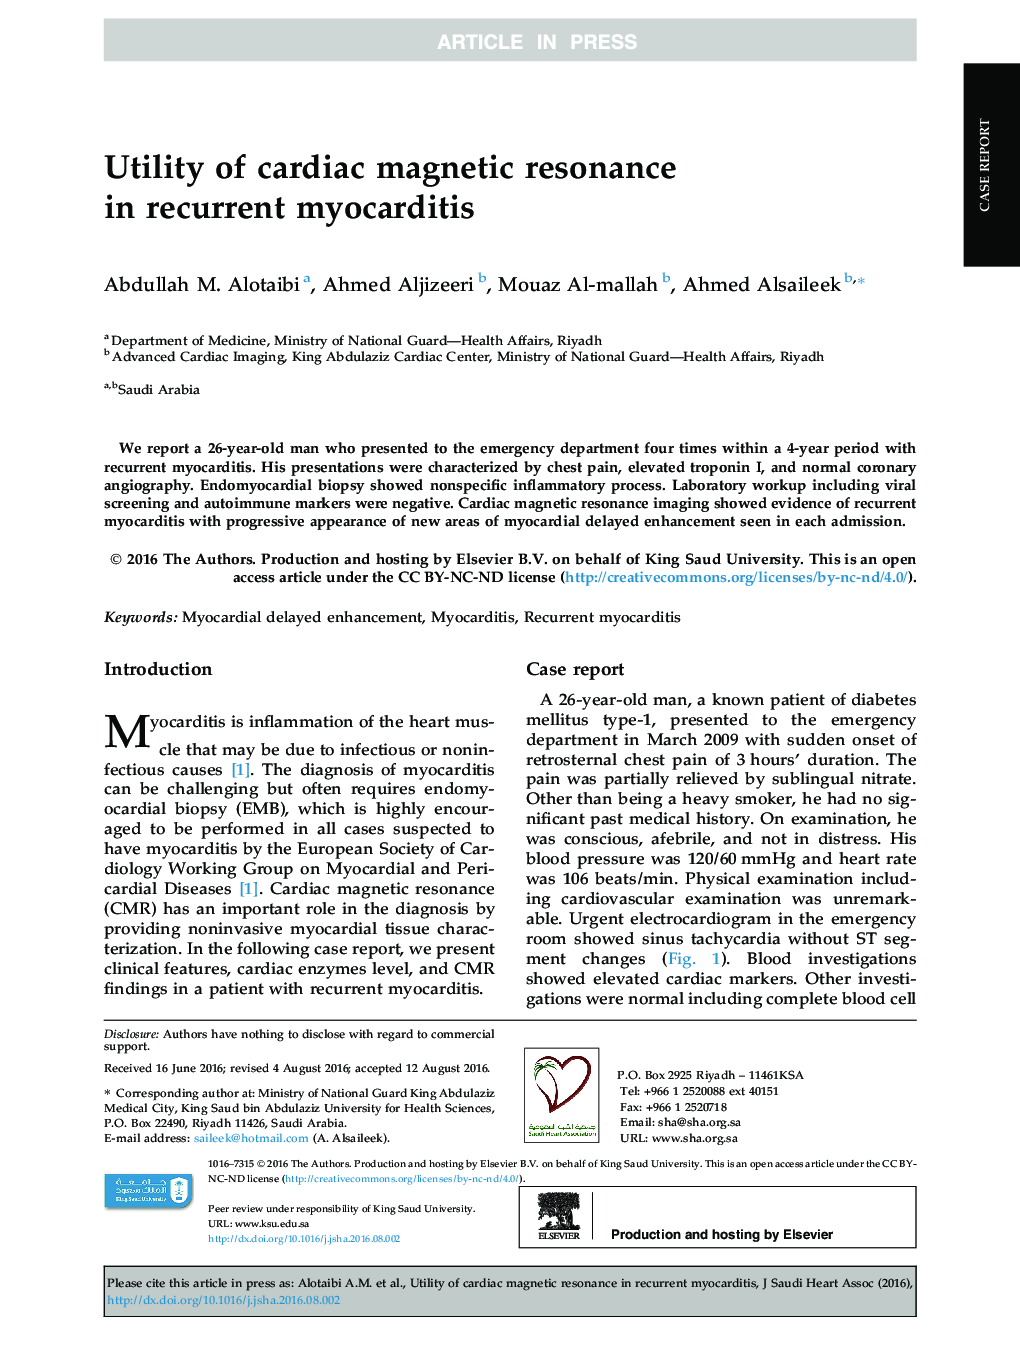 Utility of cardiac magnetic resonance in recurrent myocarditis